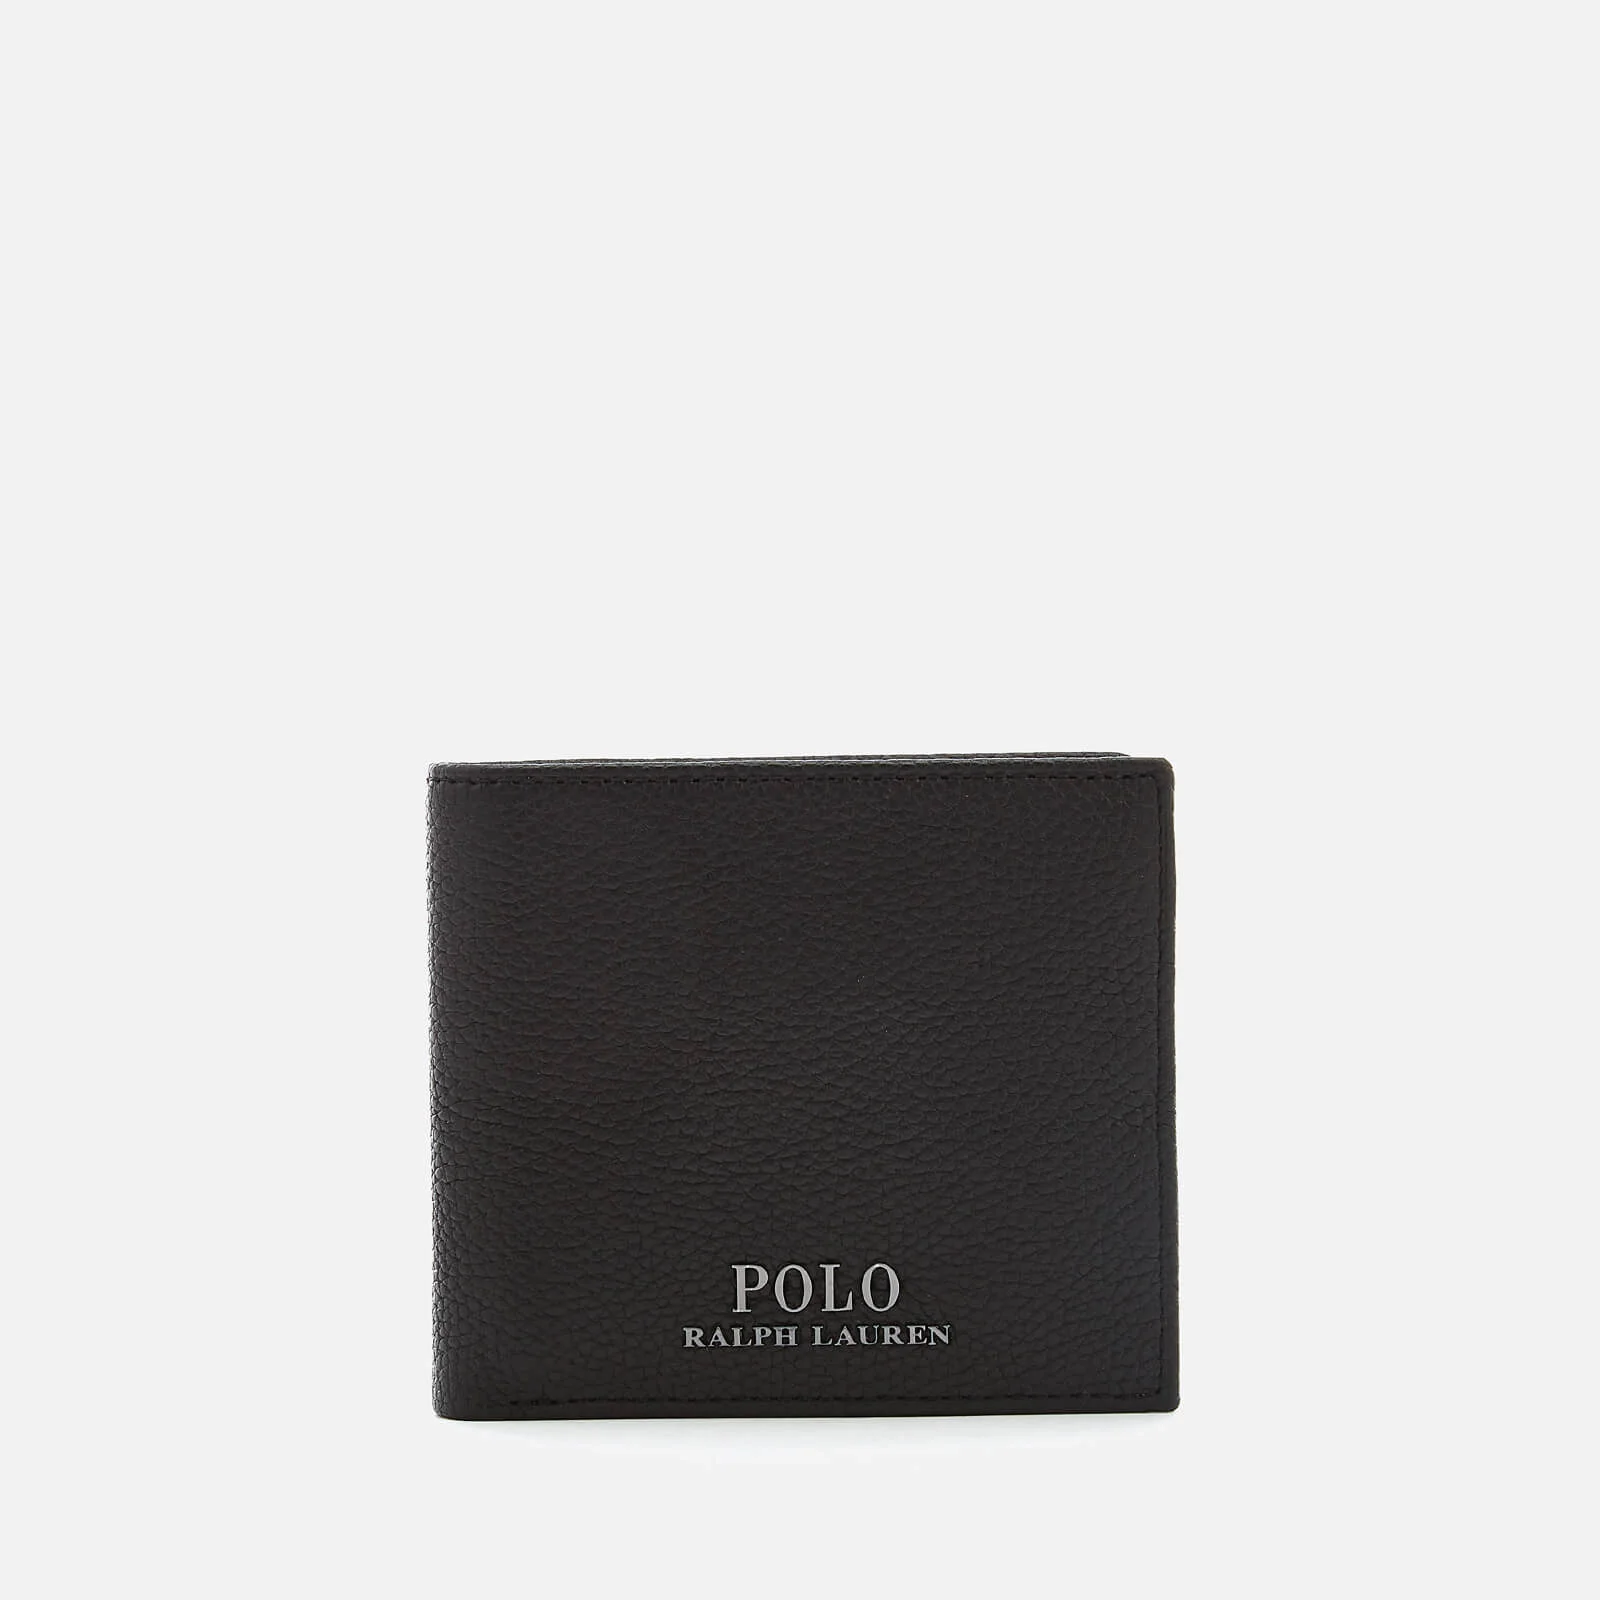 Polo Ralph Lauren Men's PRL Leather Billfold Wallet - Black Image 1